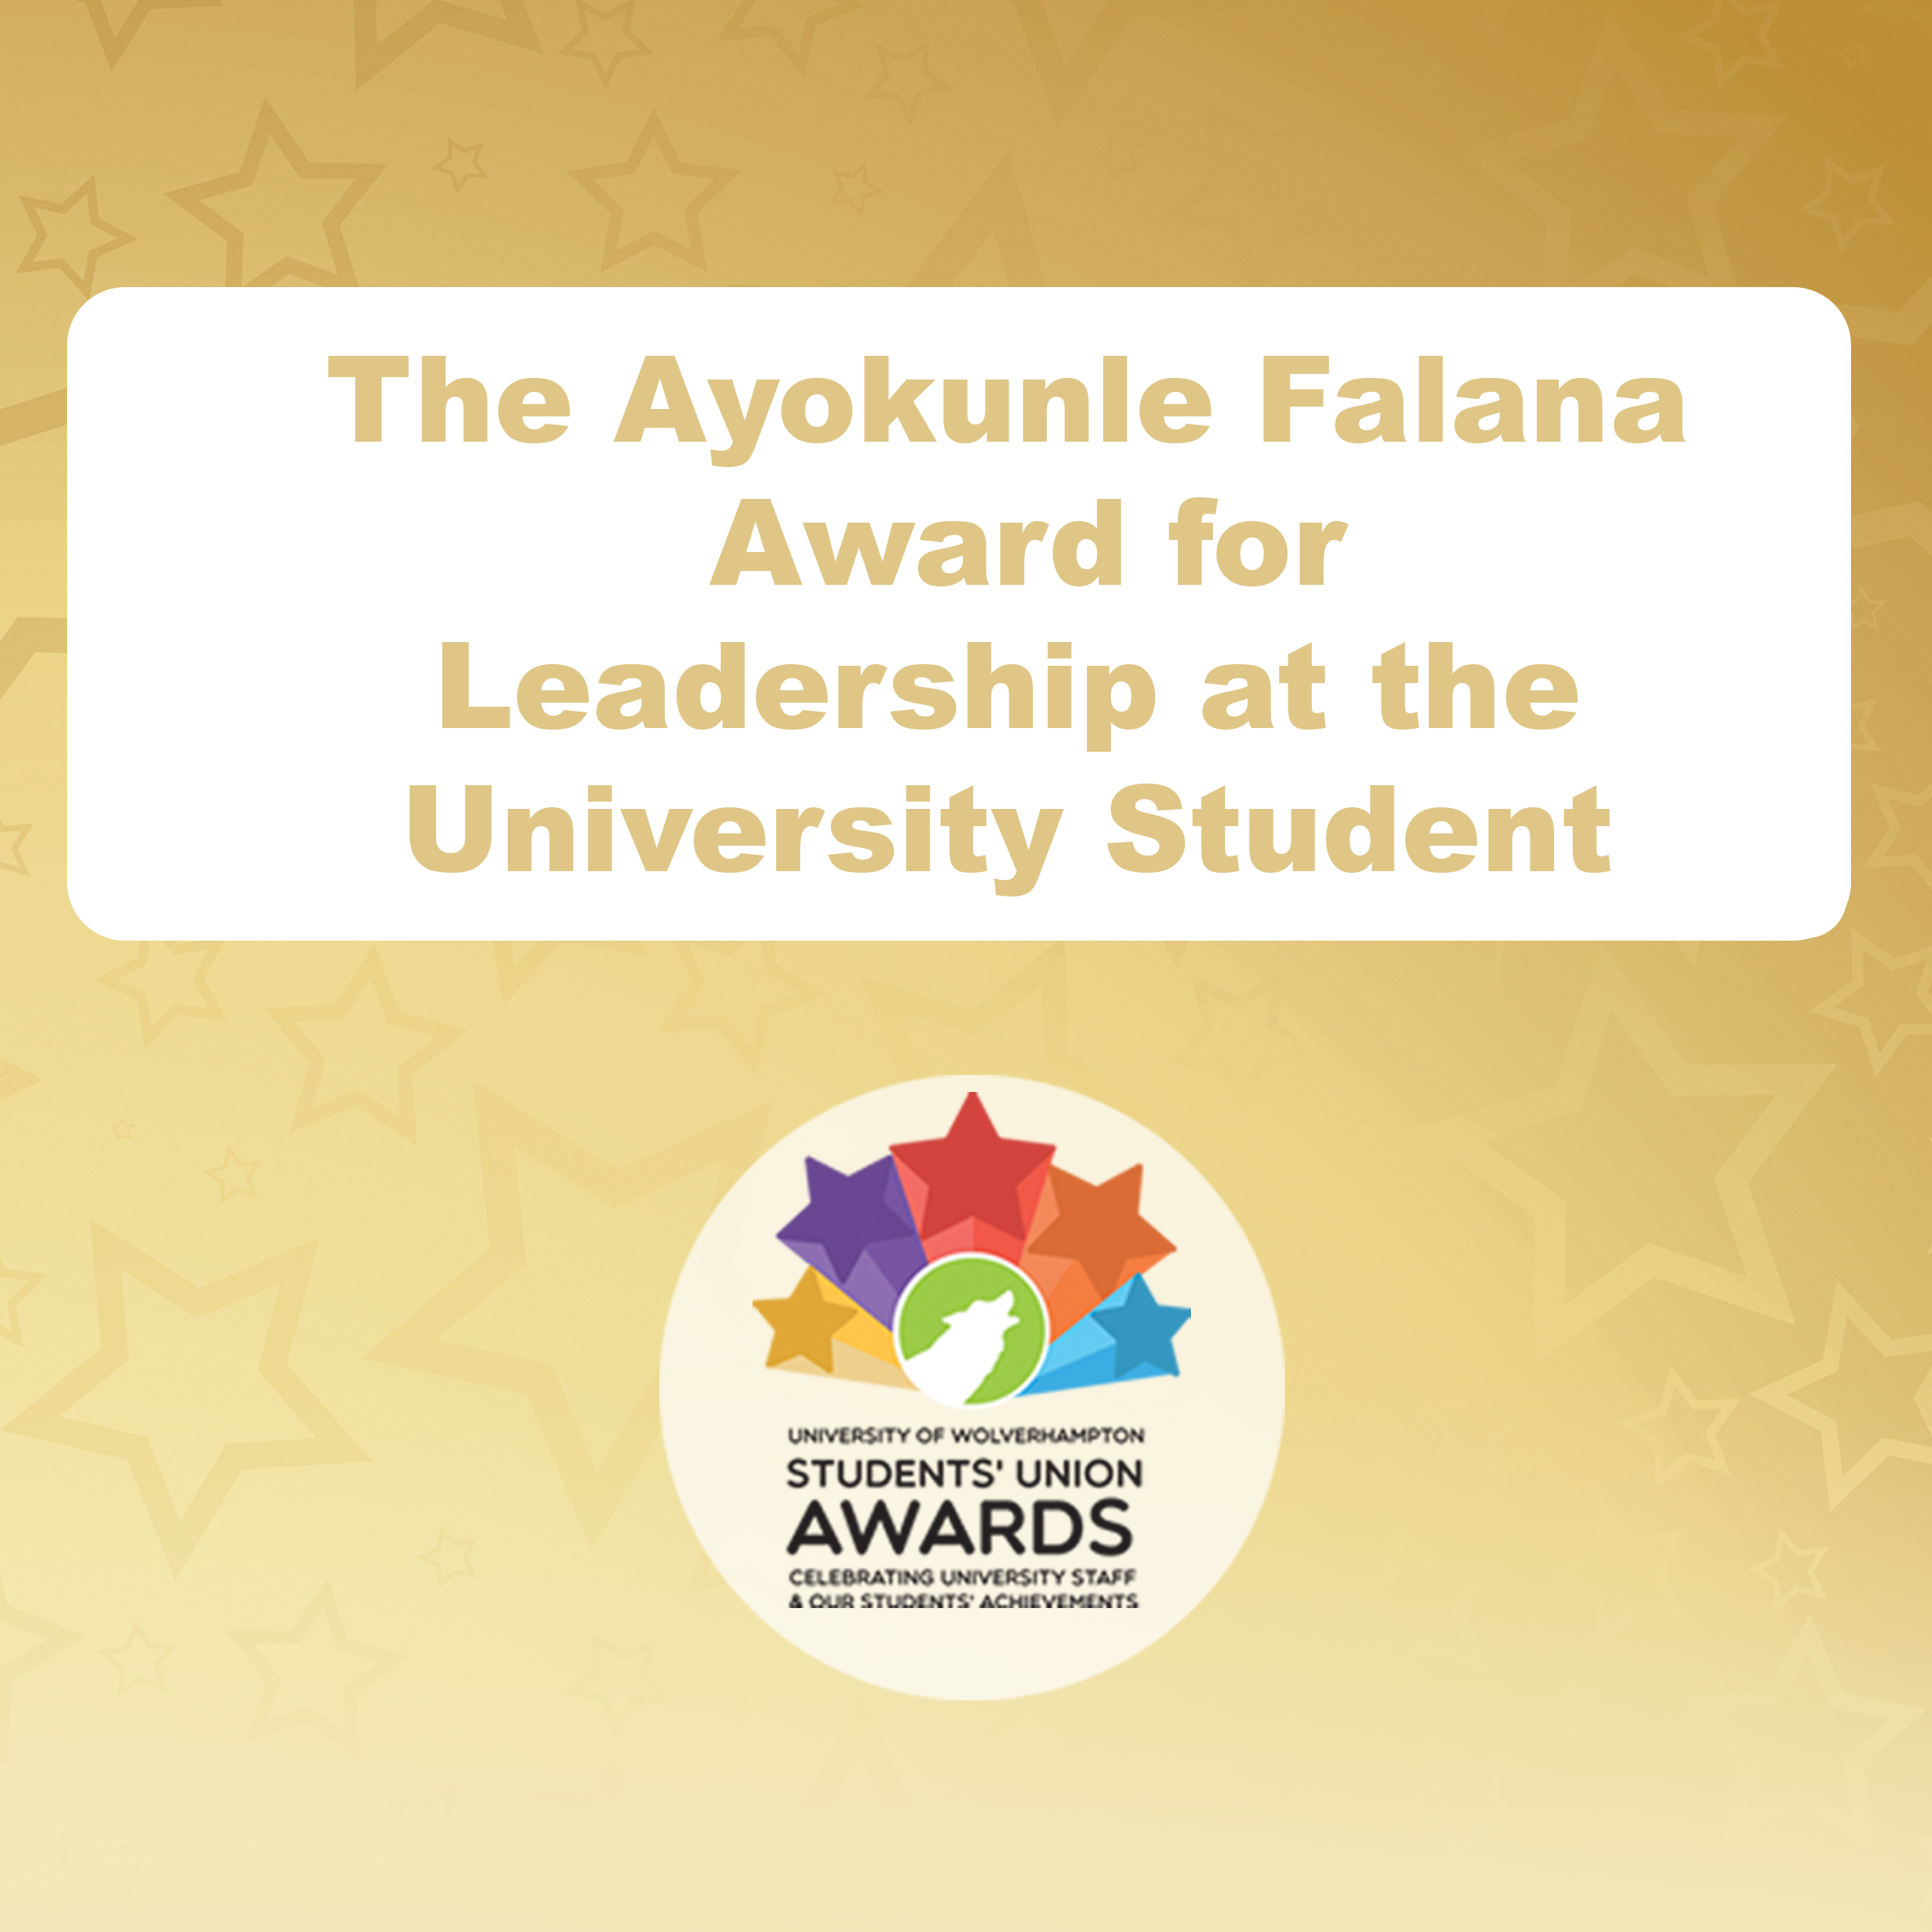 The Ayokunle Falana Award for Leadership at the University Student